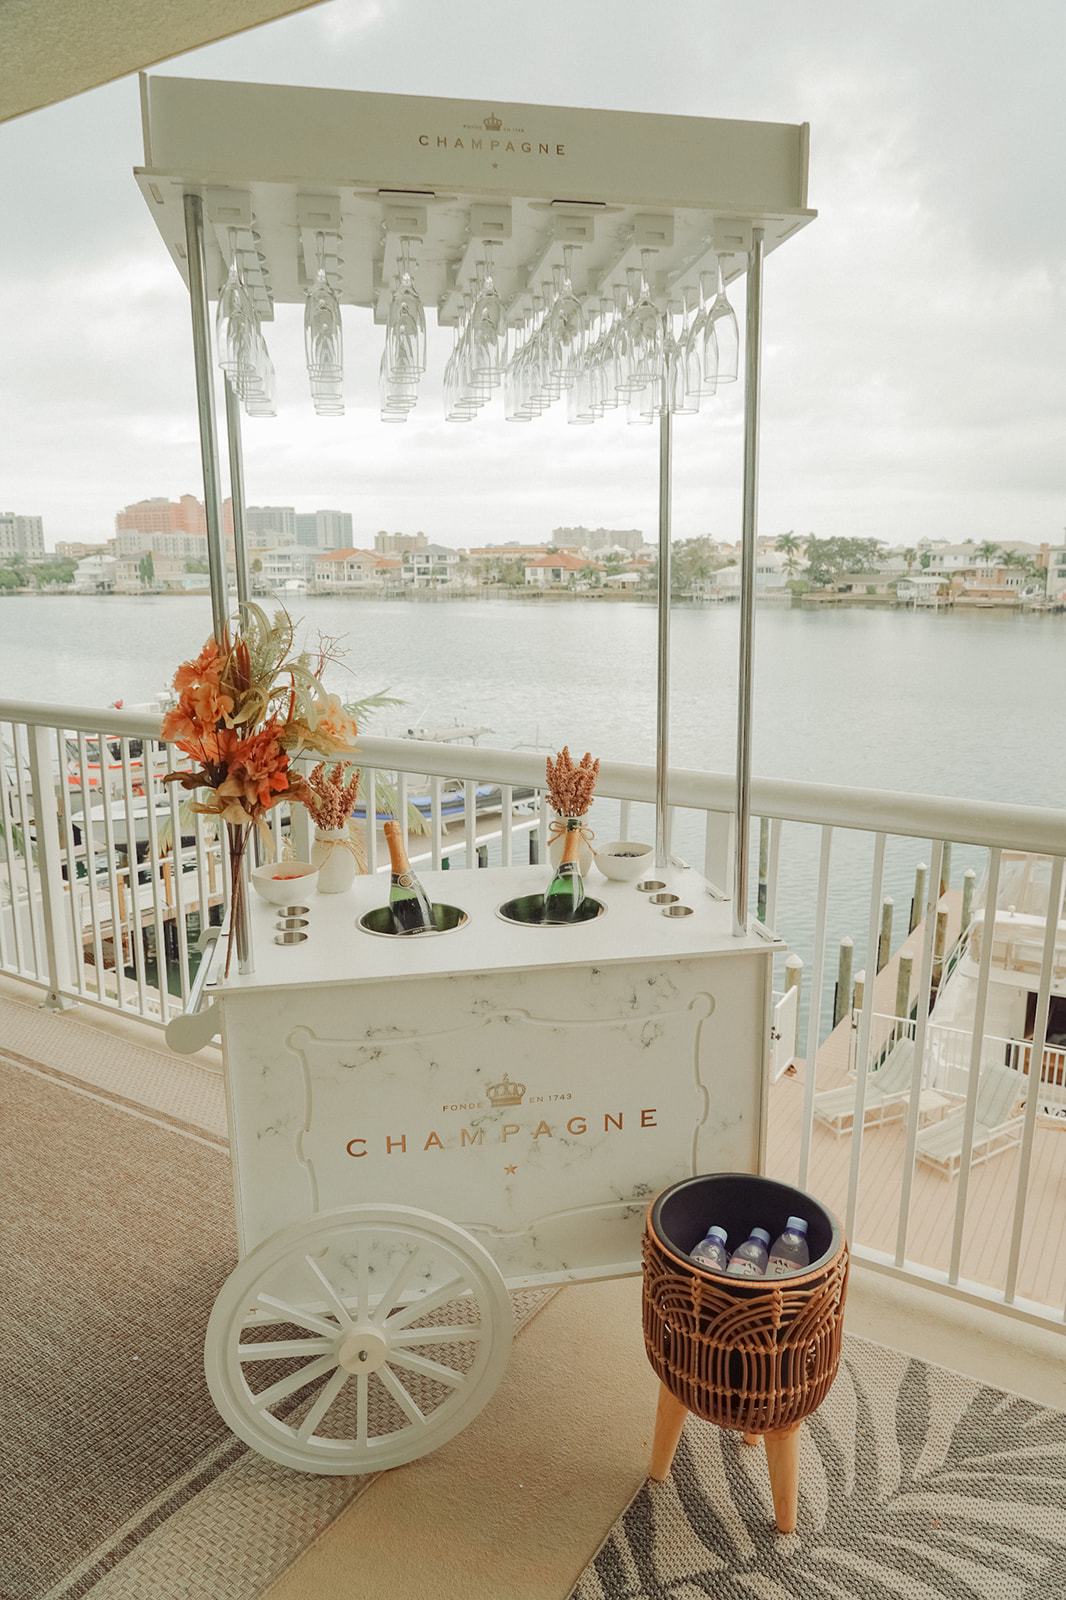 bachelorette party champagne cart rental Florida